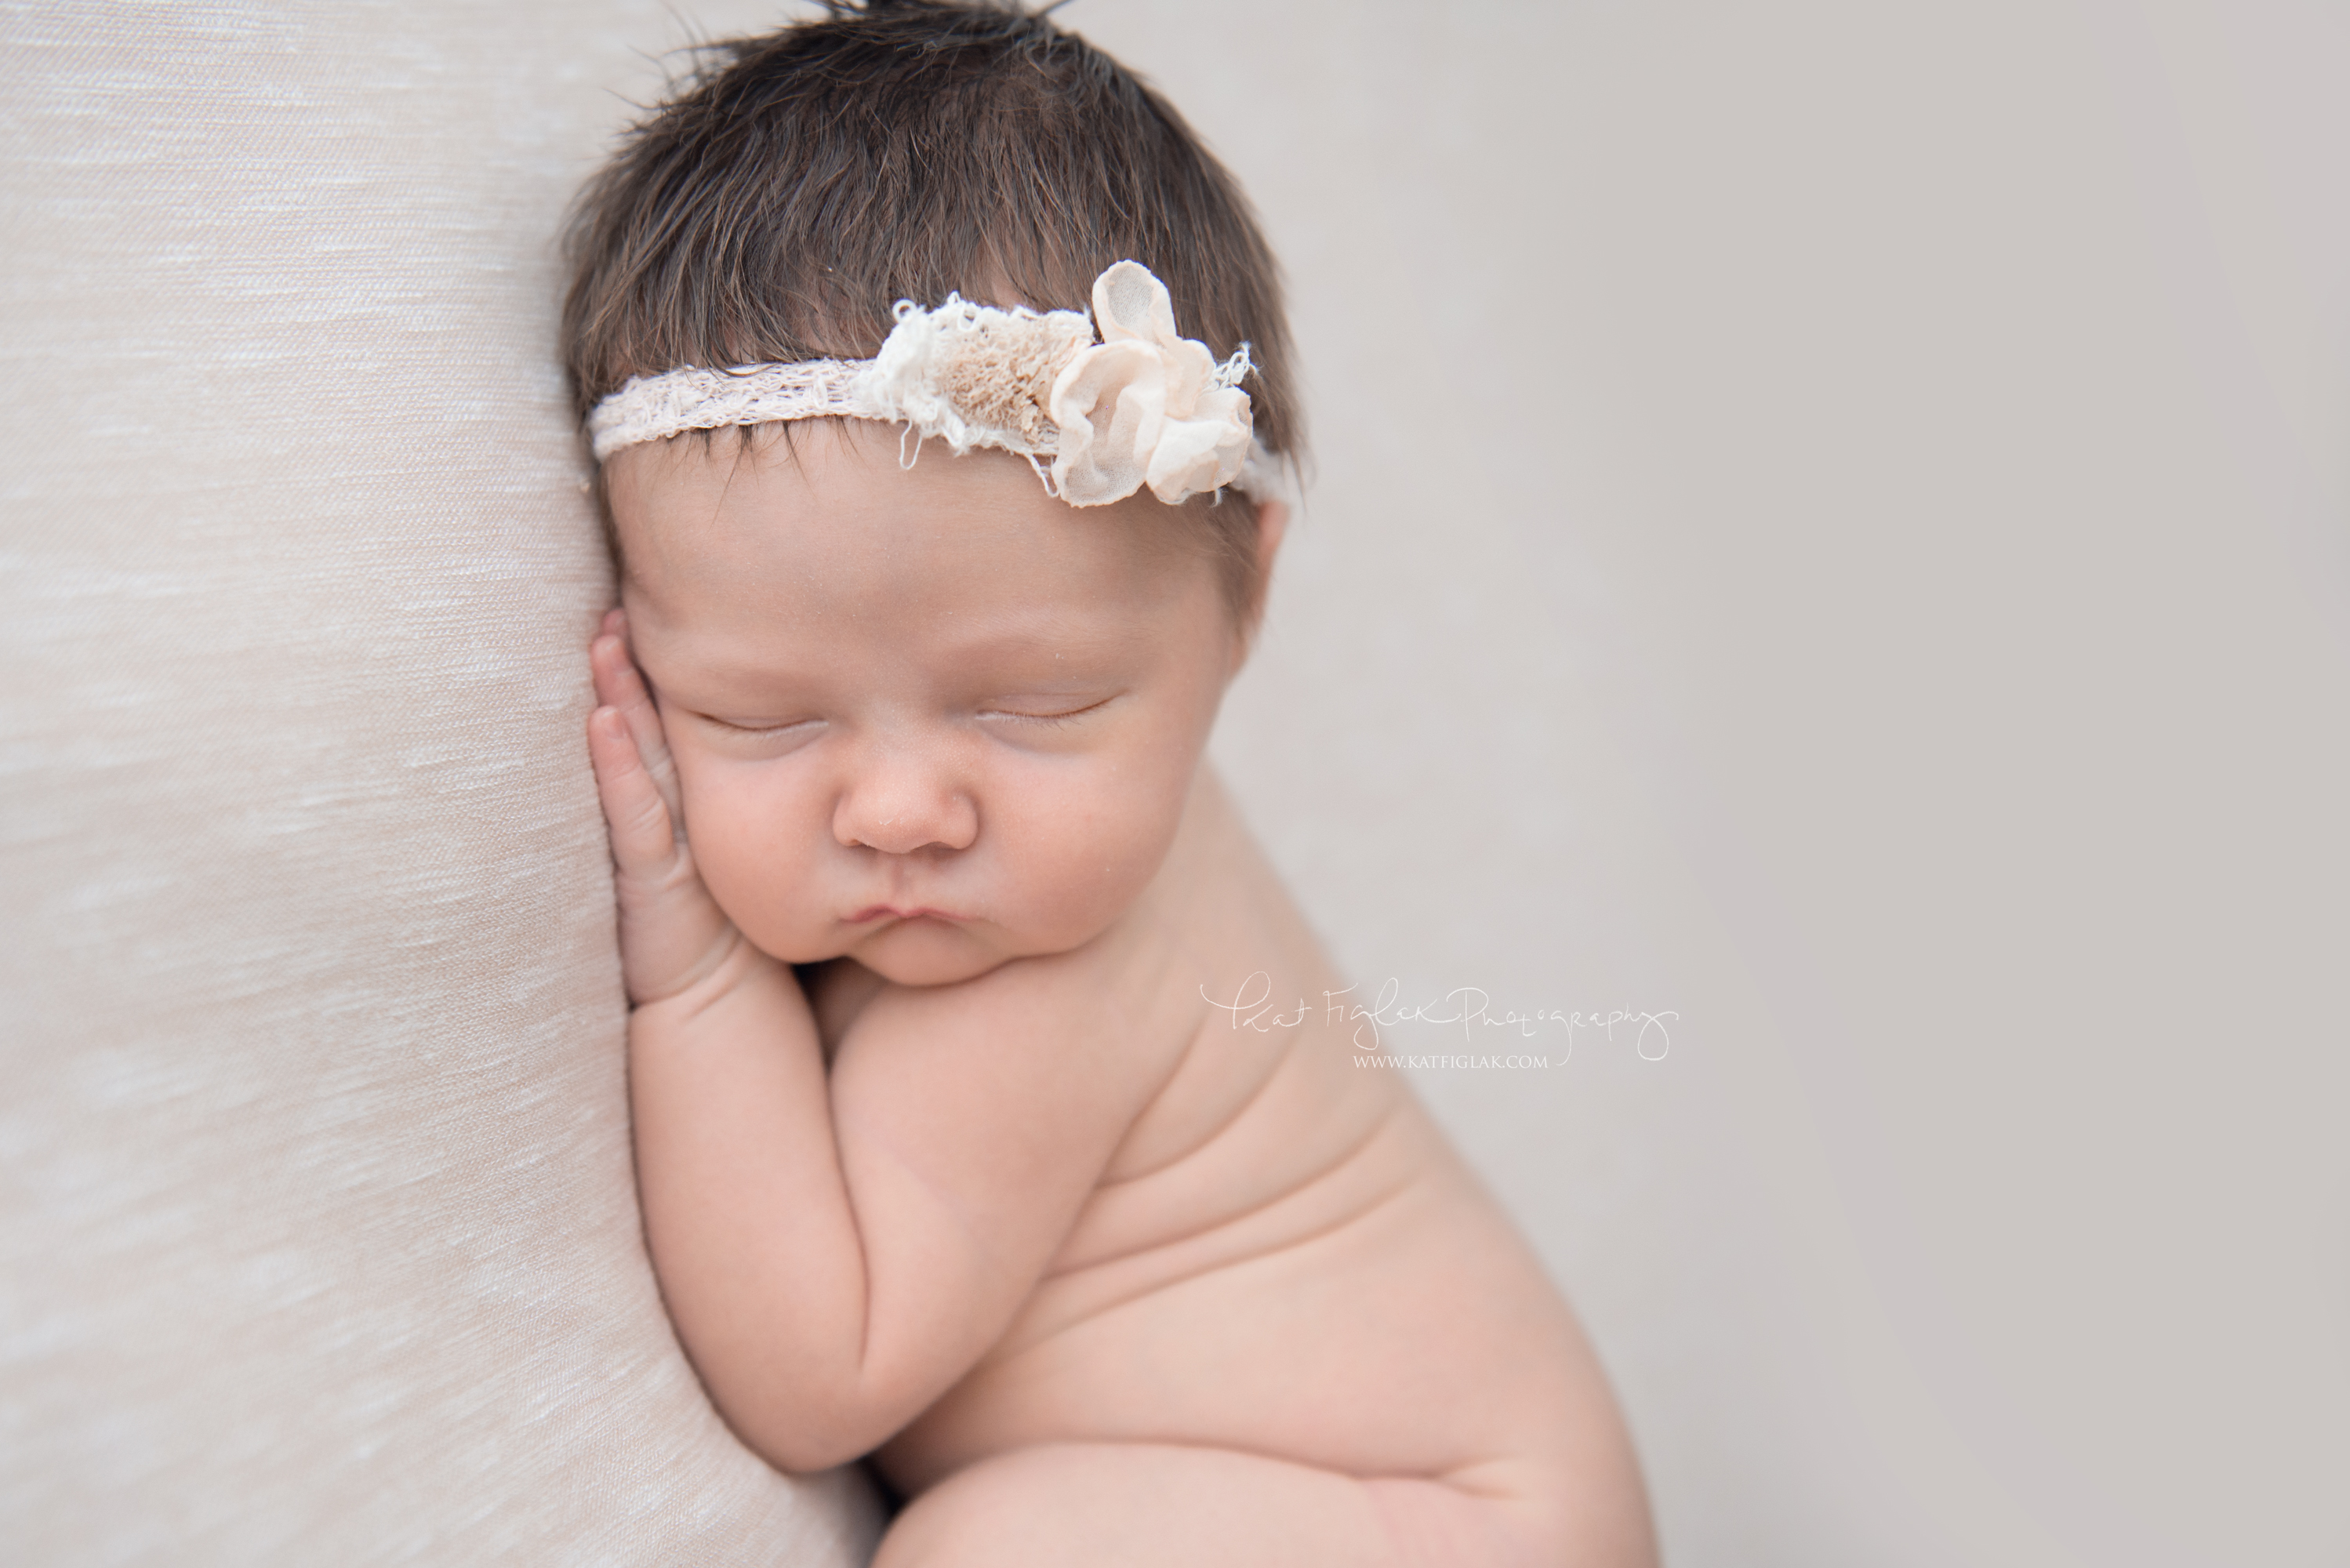 newborn baby girl sleeping wearing a floral headband